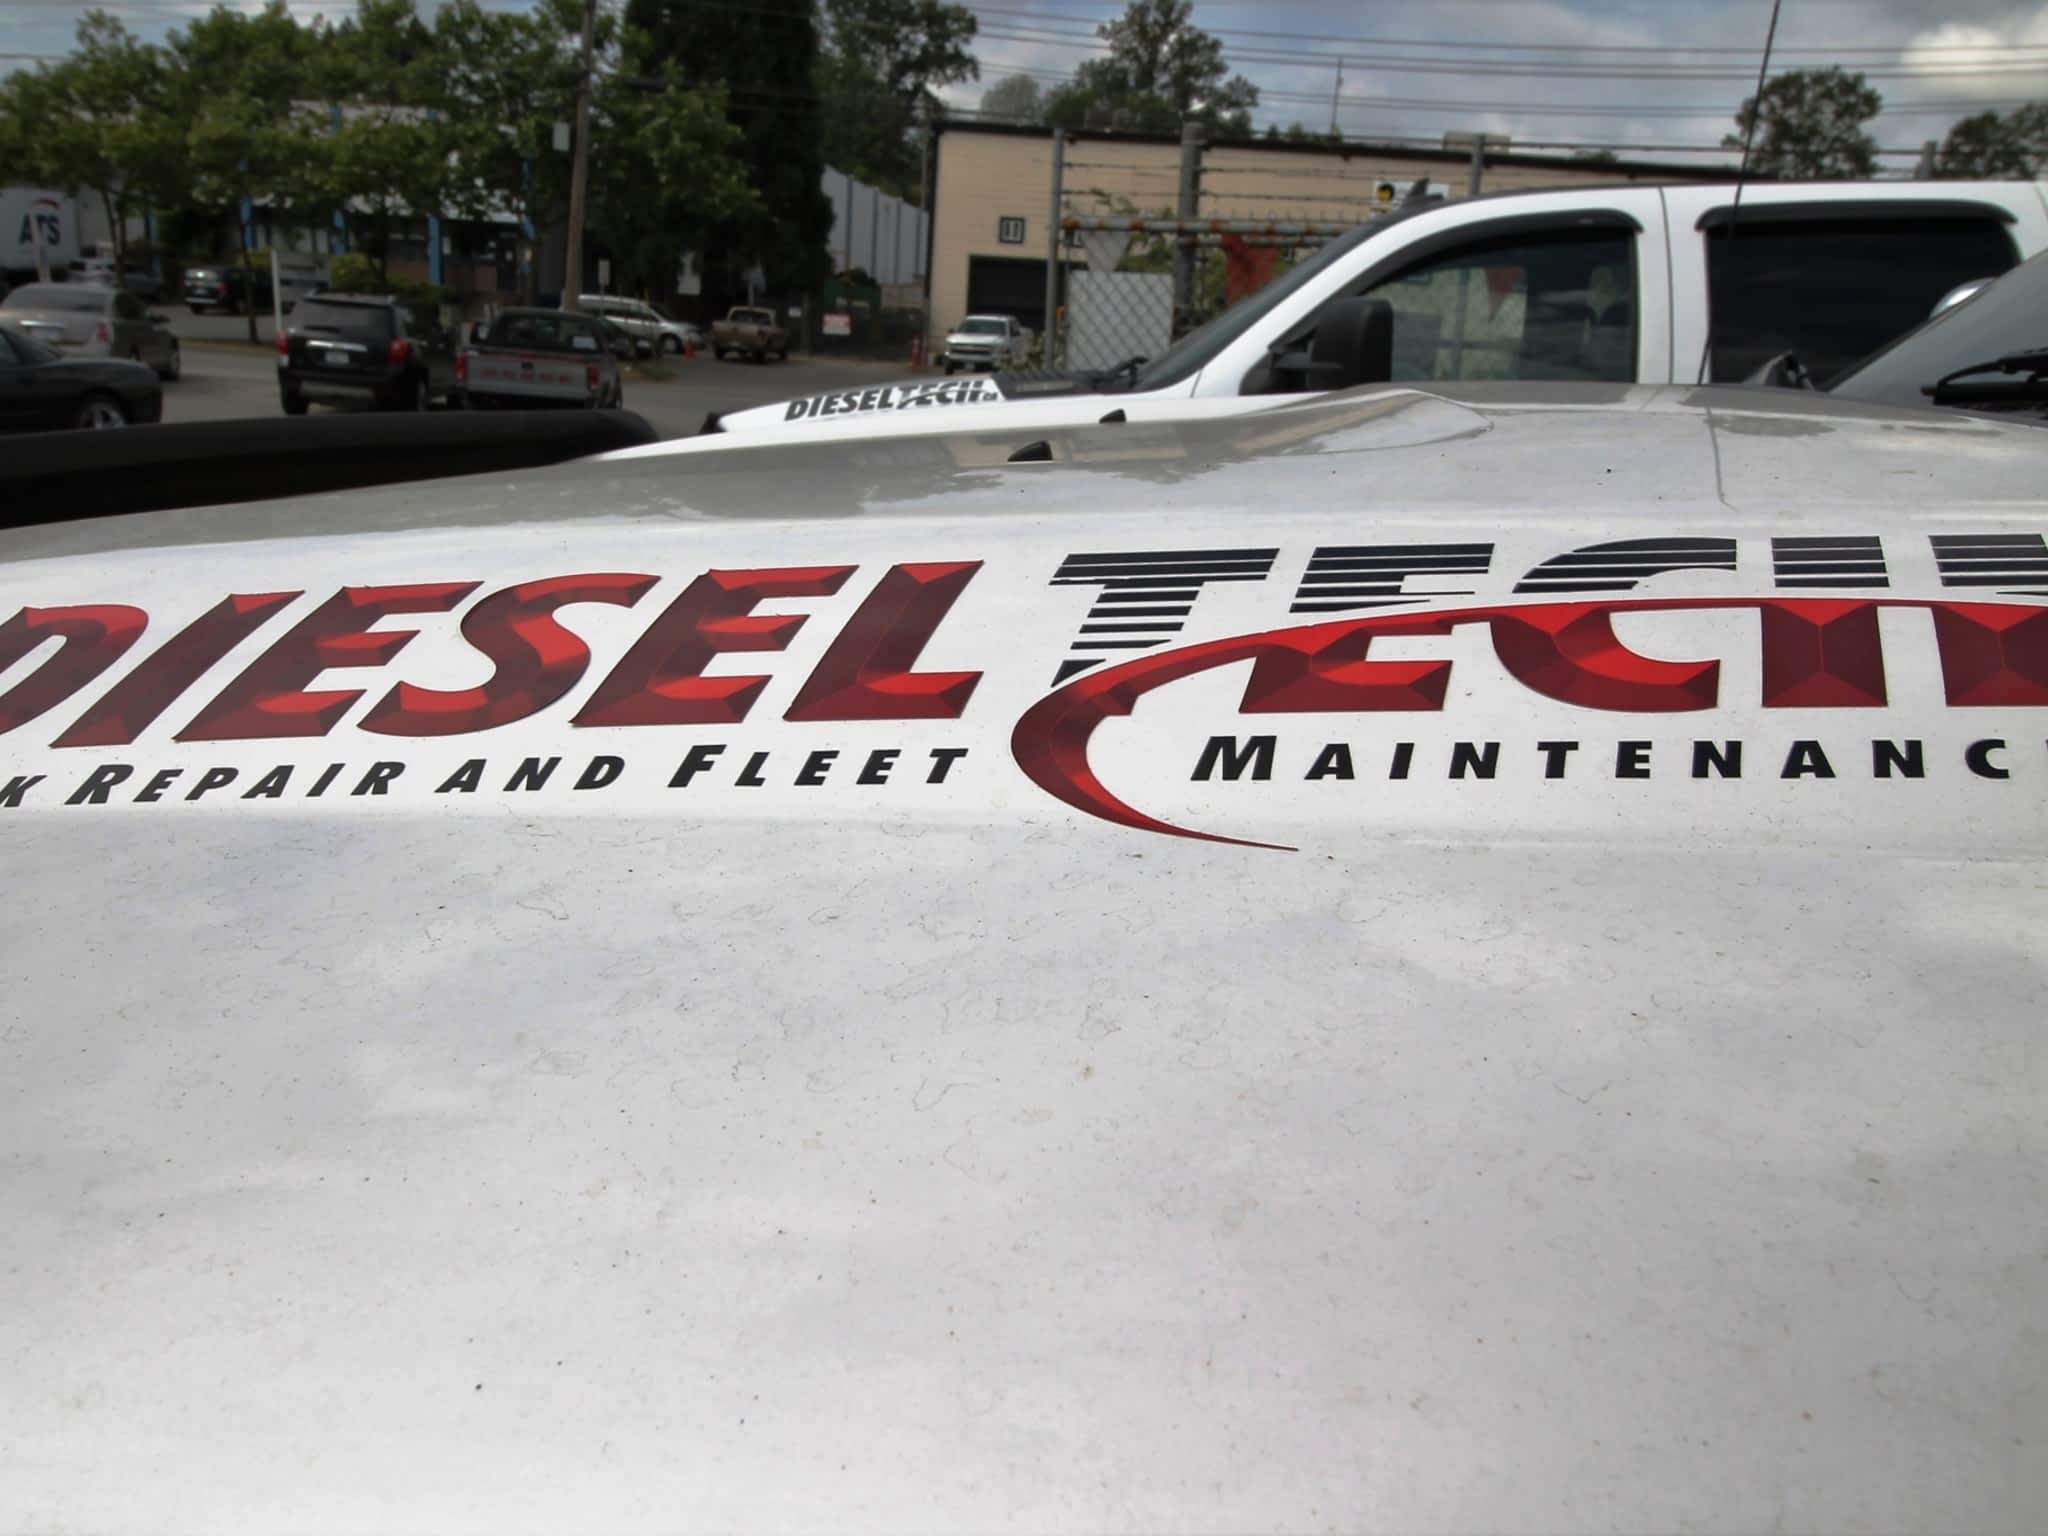 photo Dieseltech Truck Repair & Mobile Service